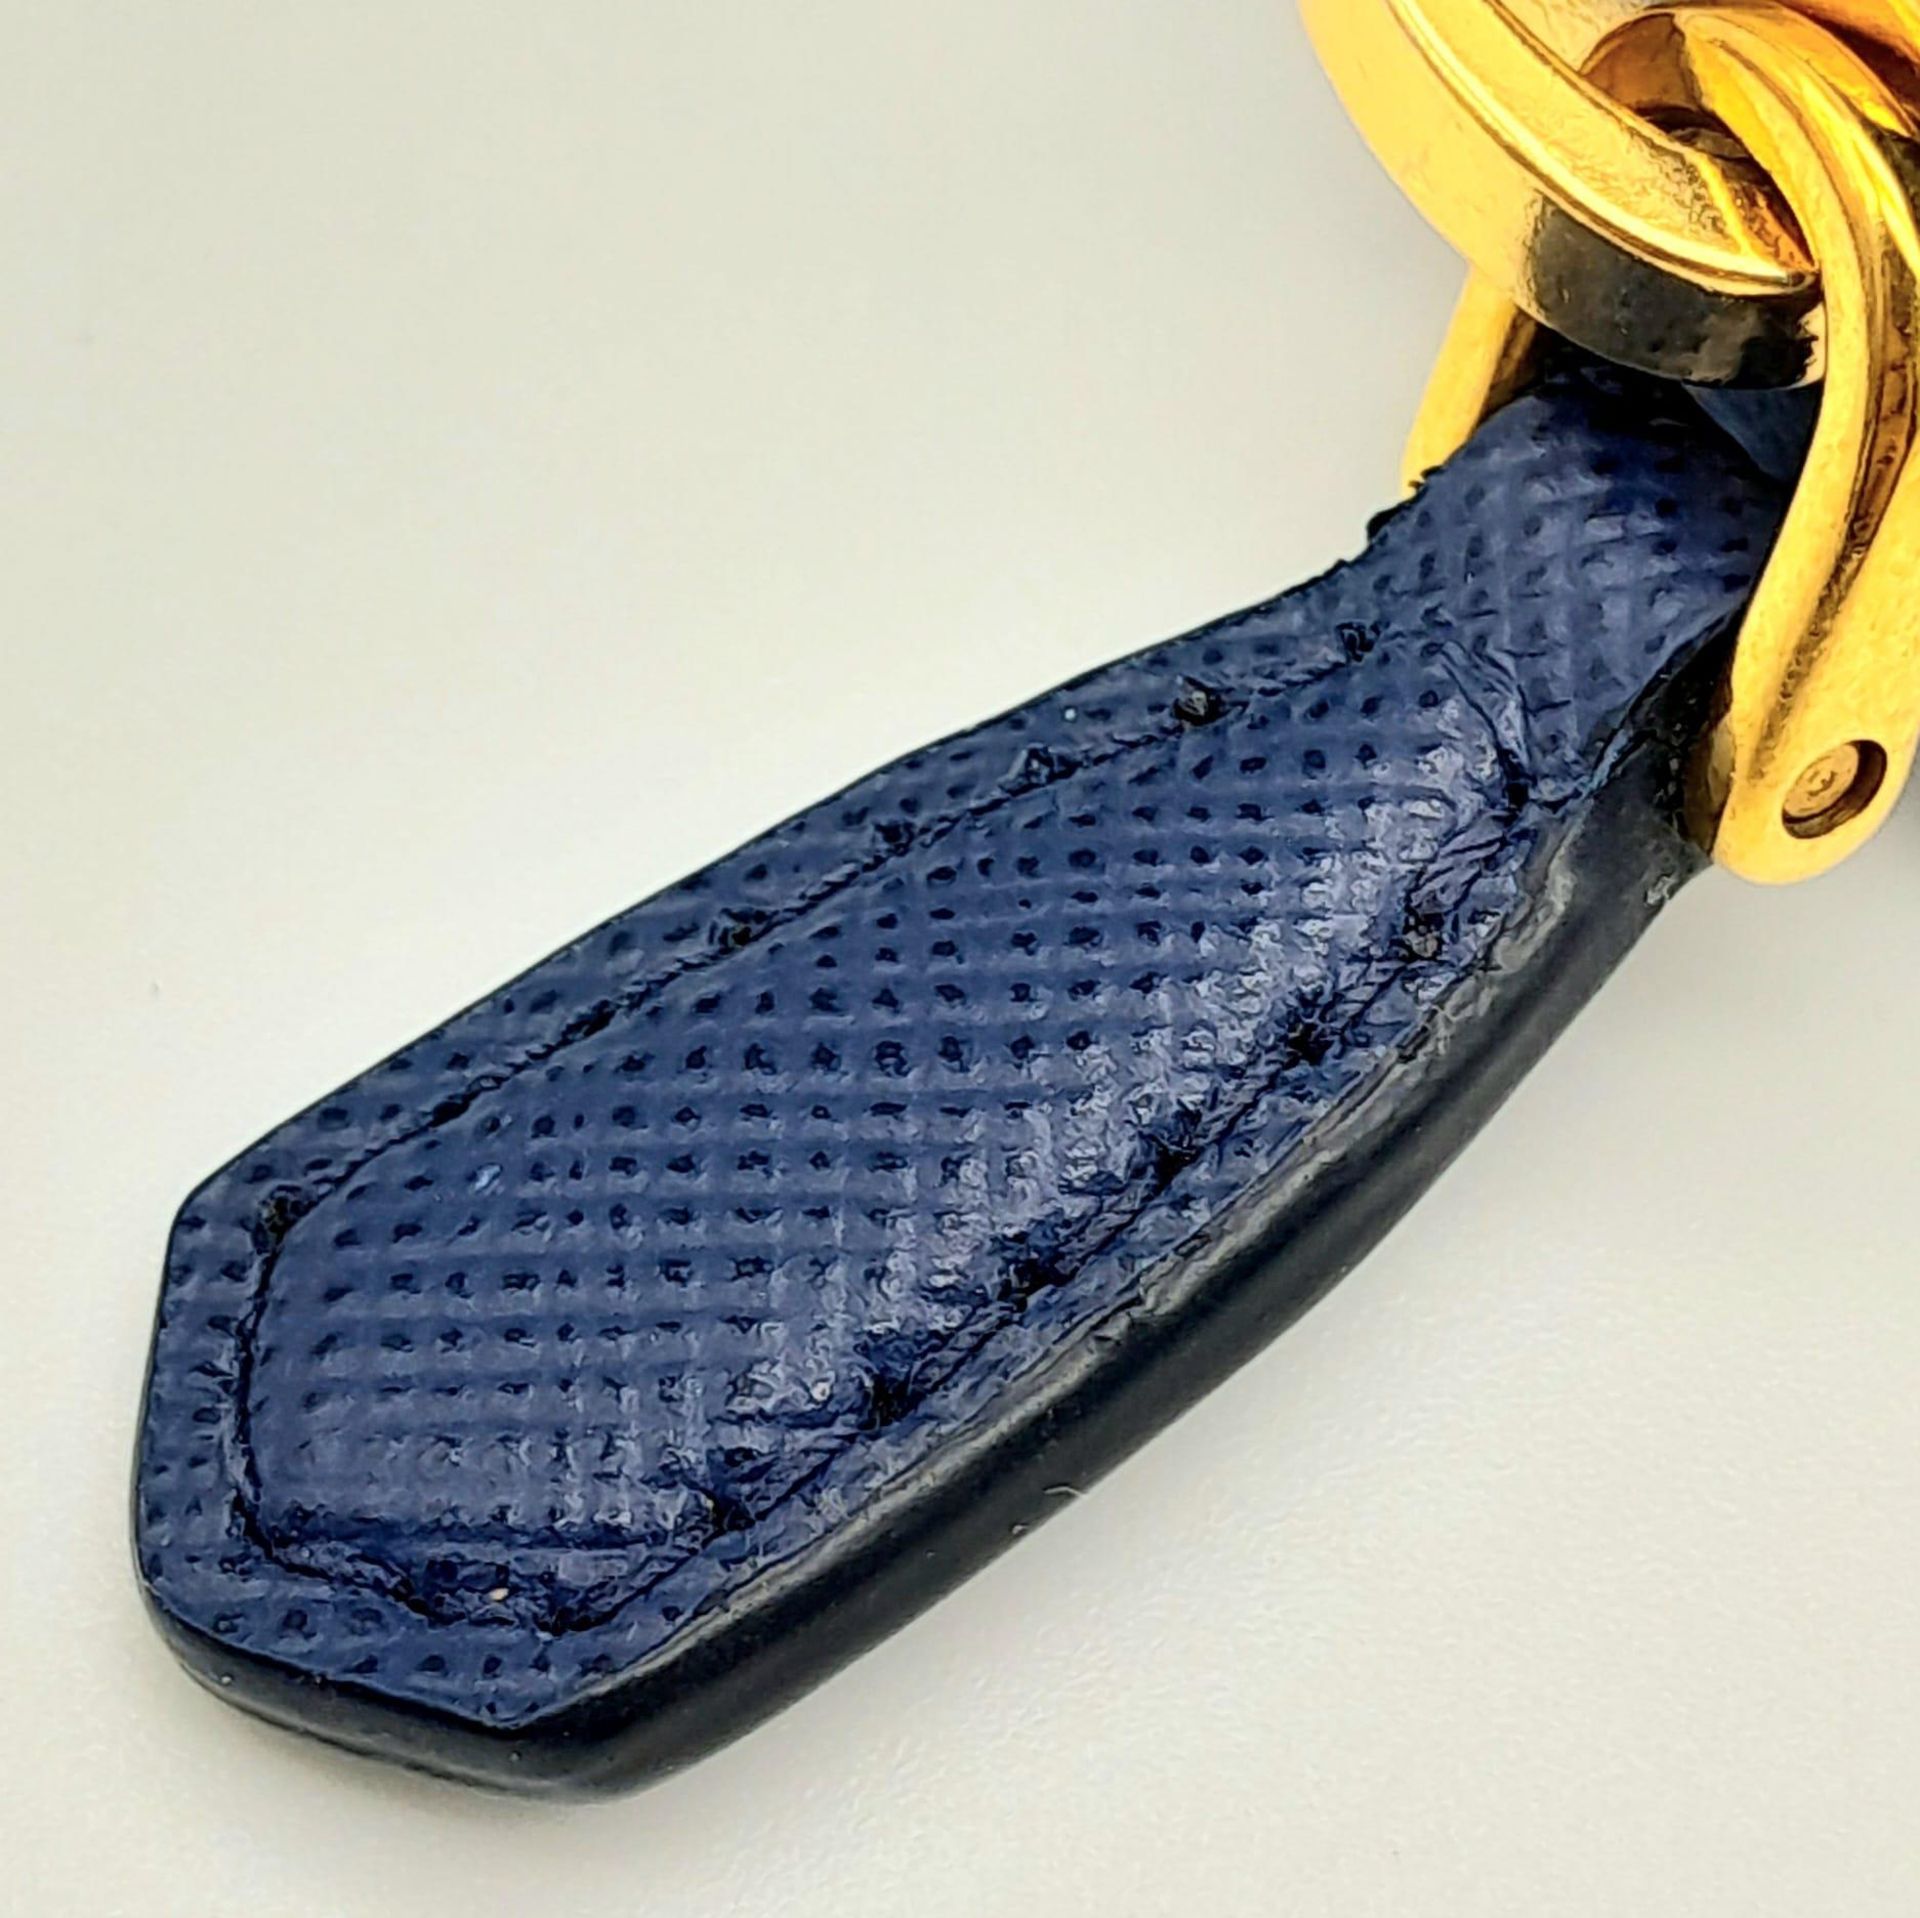 A Prada Royal Blue Purse/Wallet. Saffiano leather exterior, with the Prada logo in gold-toned - Bild 5 aus 7